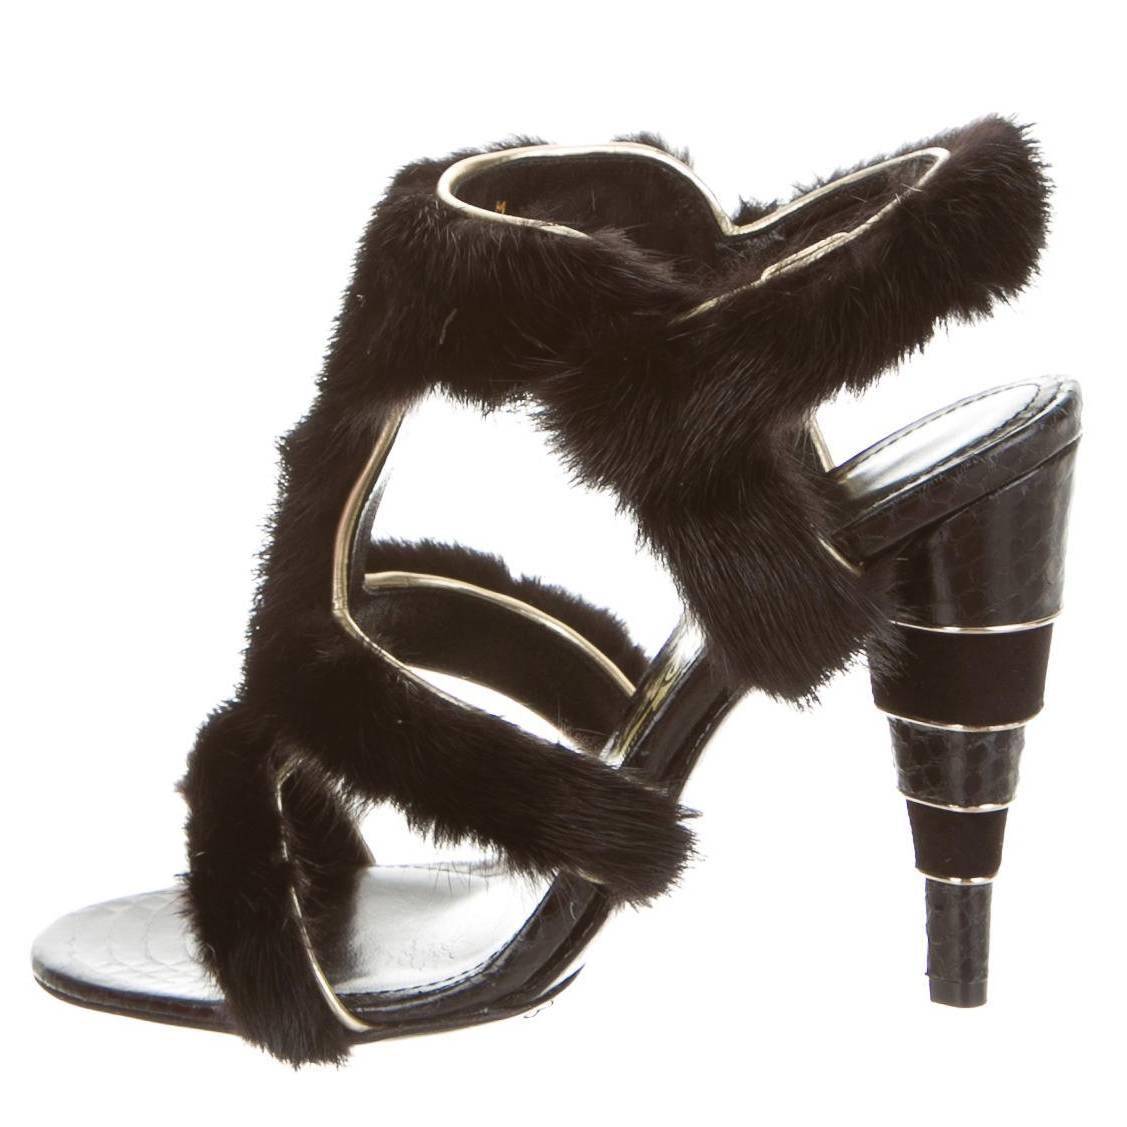 Salvatore Ferragamo NEW & SOLD OUT Black Mink Evening Sandals Heels in Box